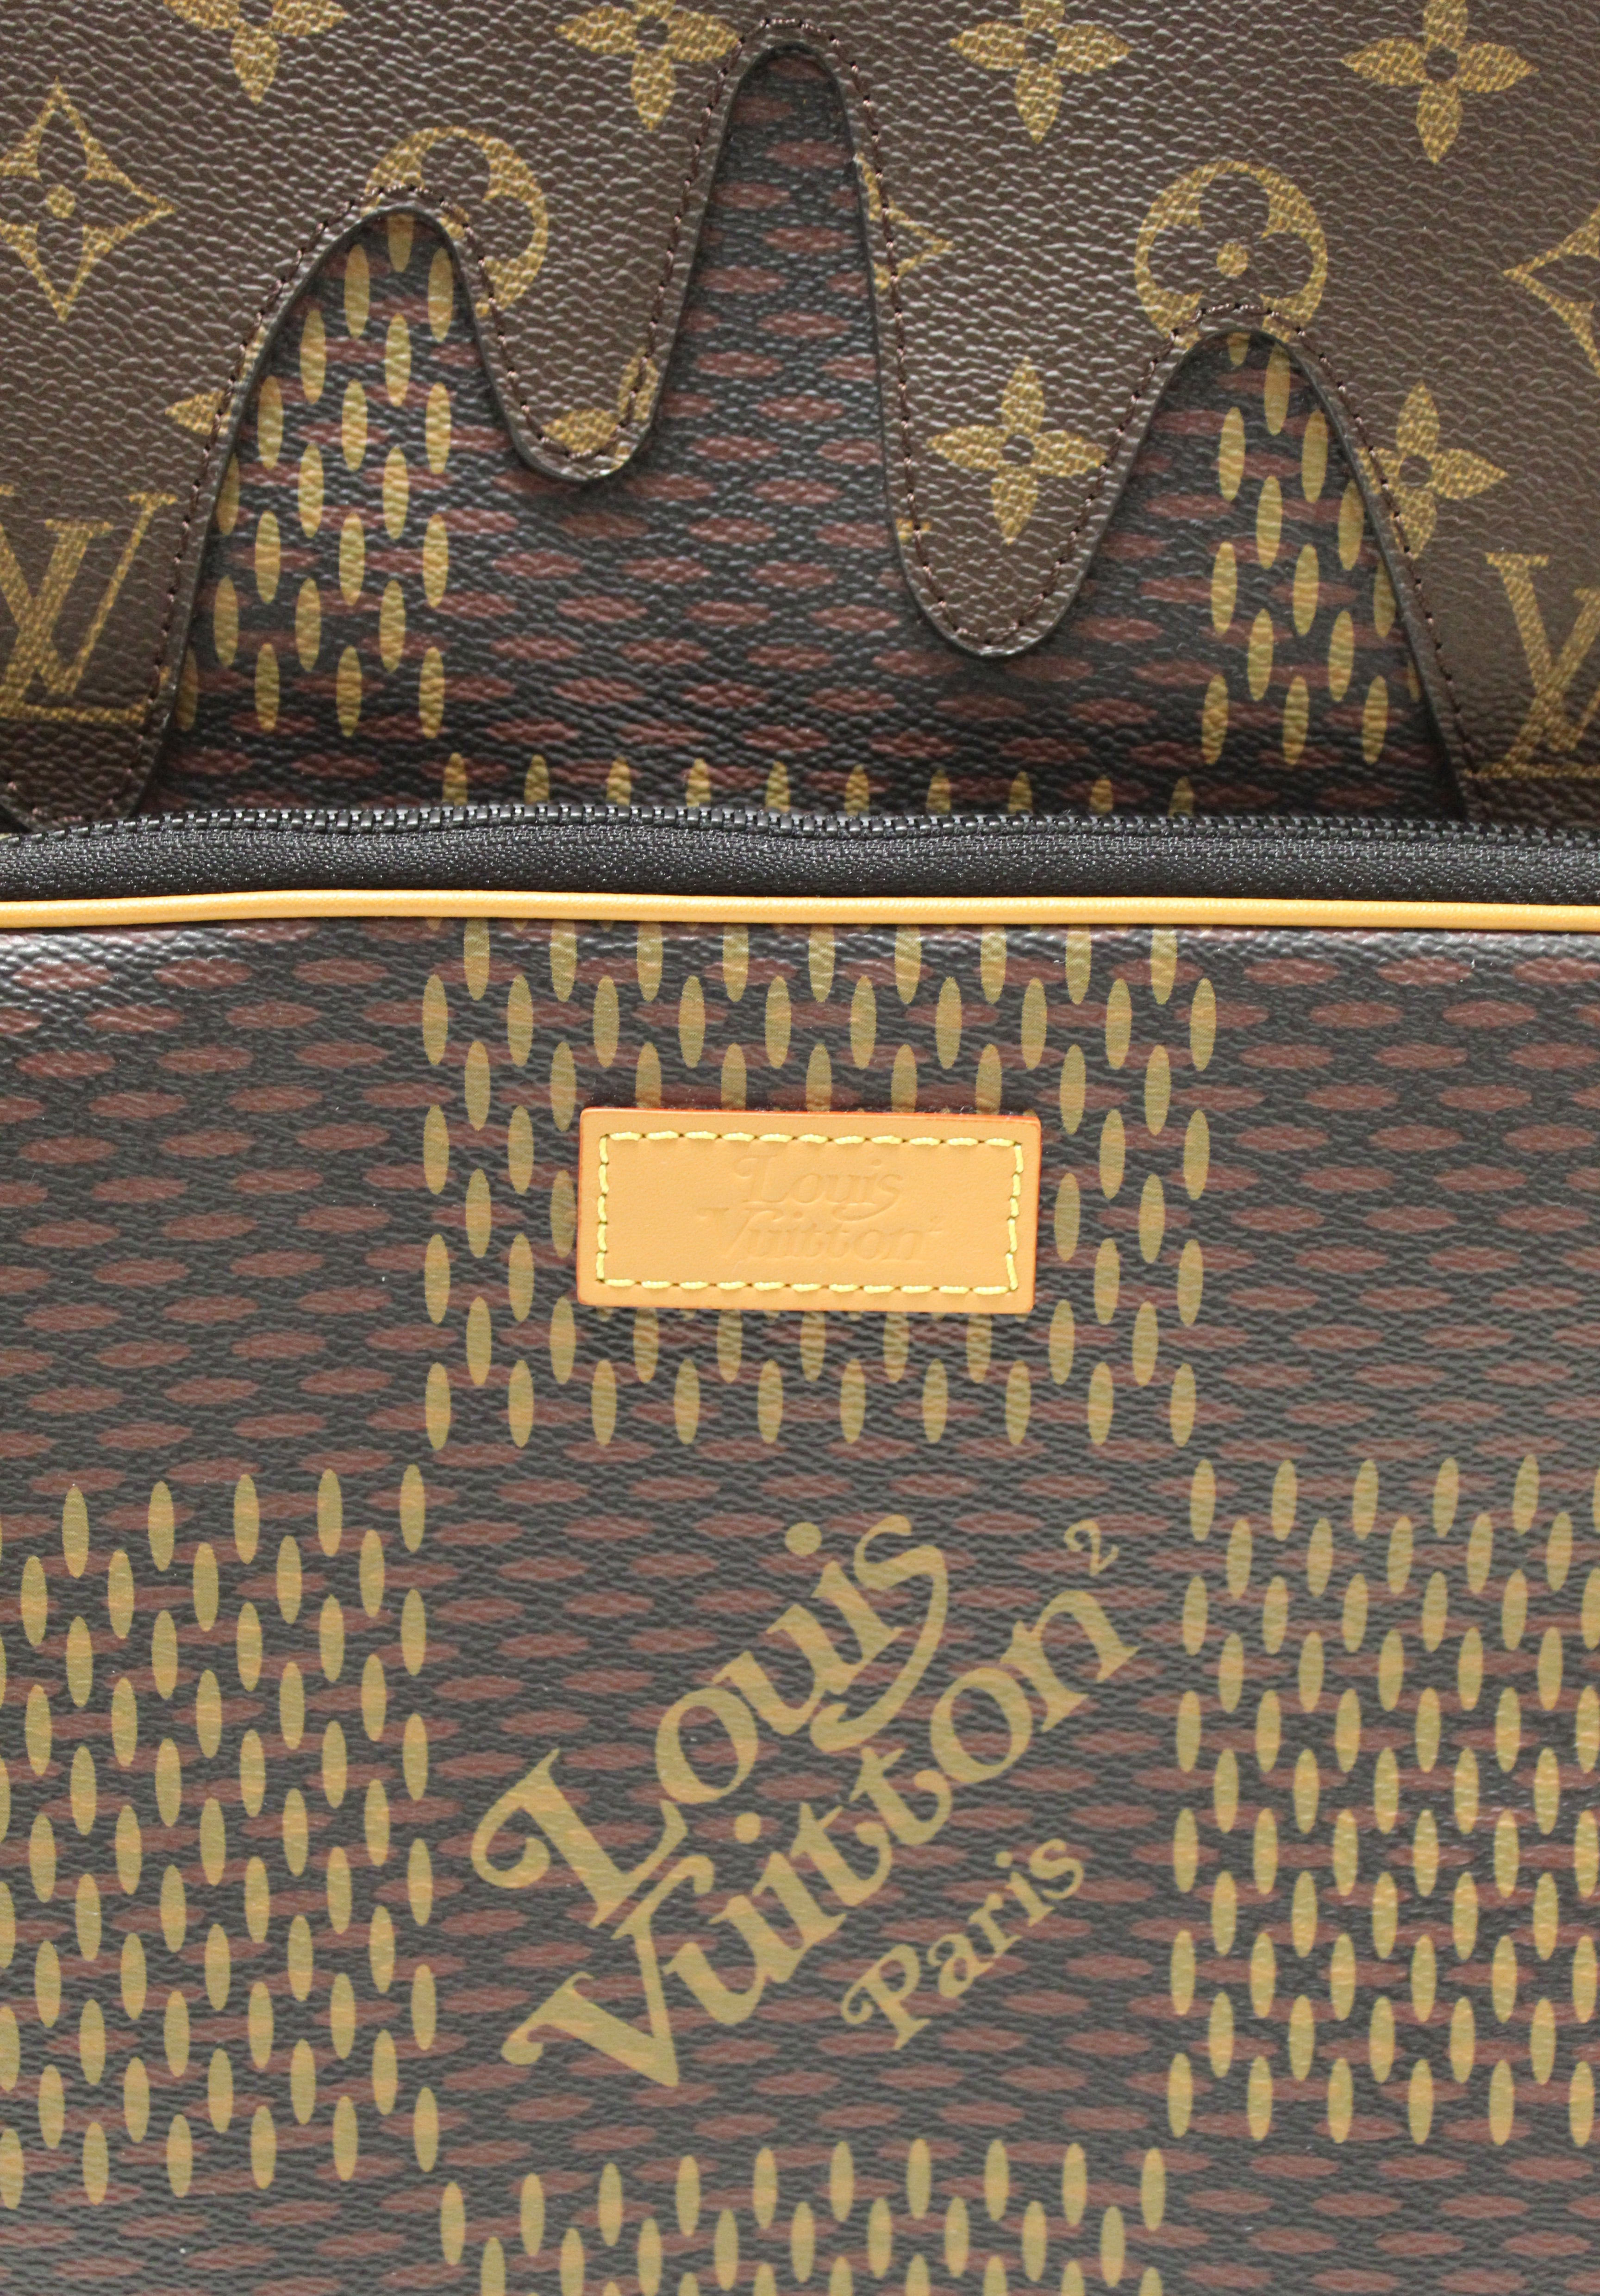 Louis Vuitton pre-owned monogram Giant Damier Nigo Campus backpack